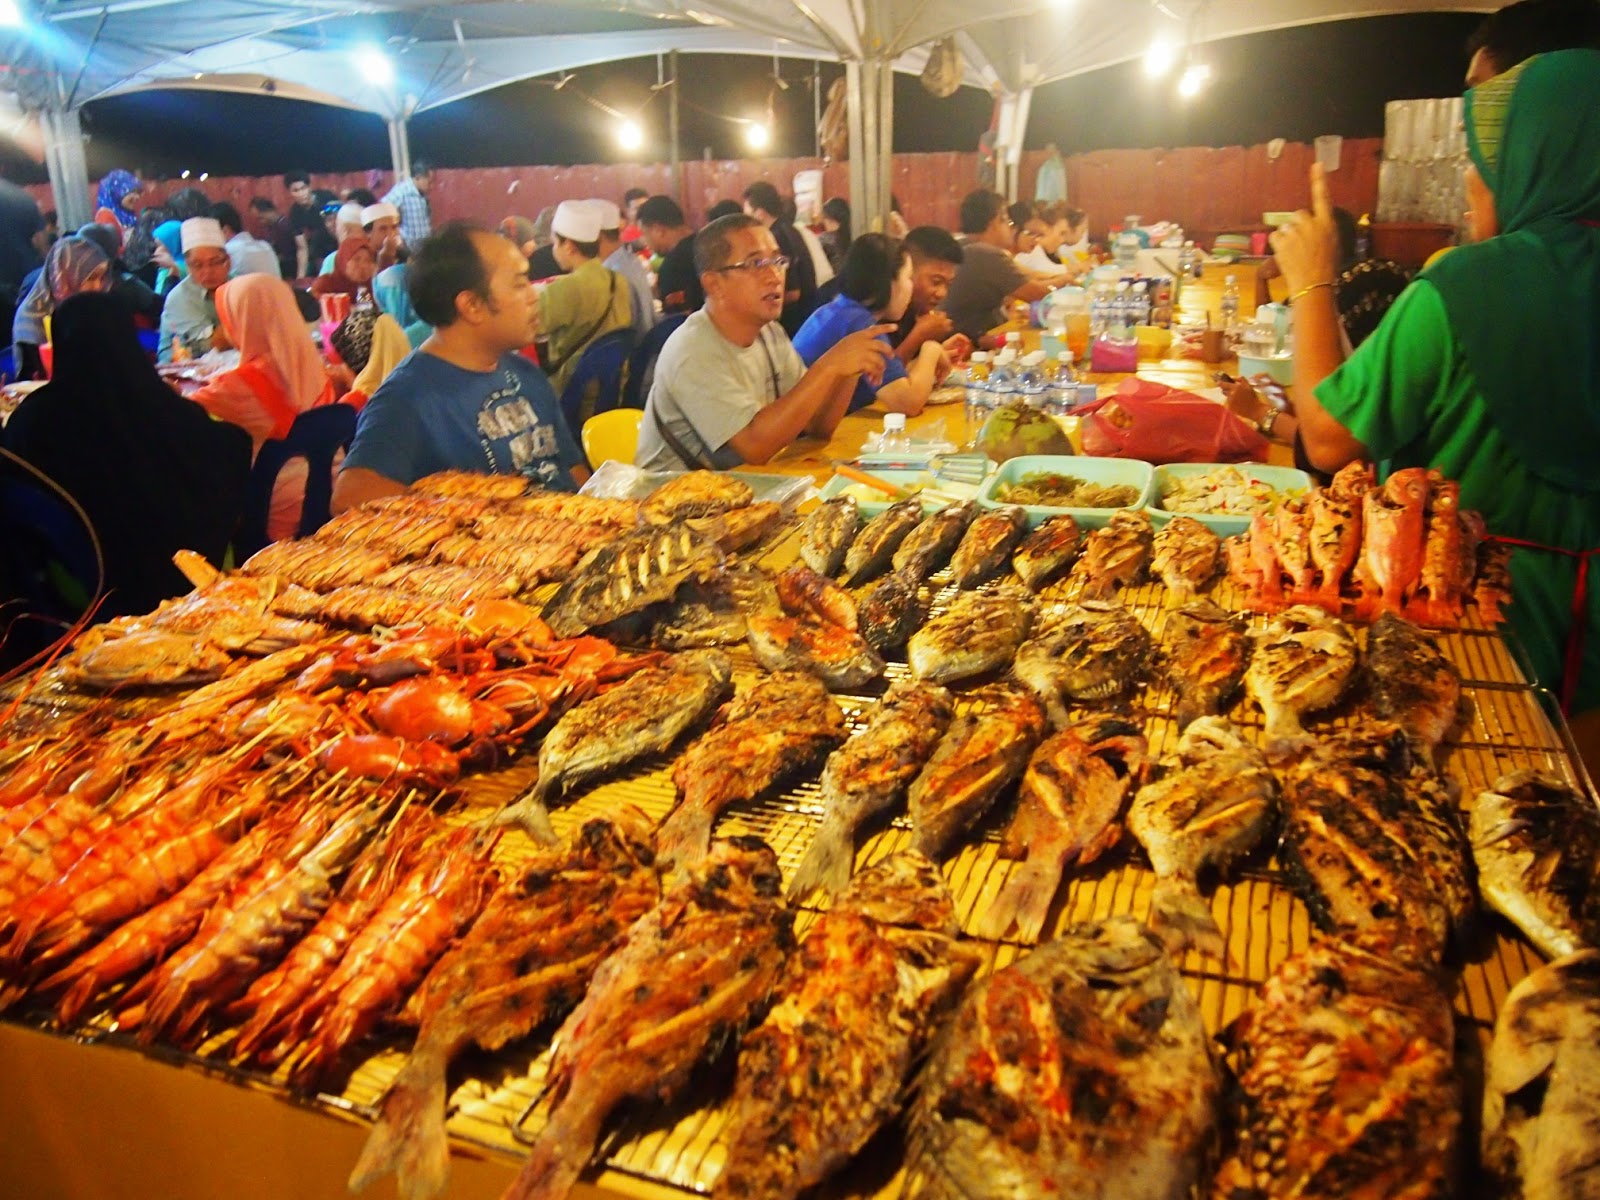 Filipino night market